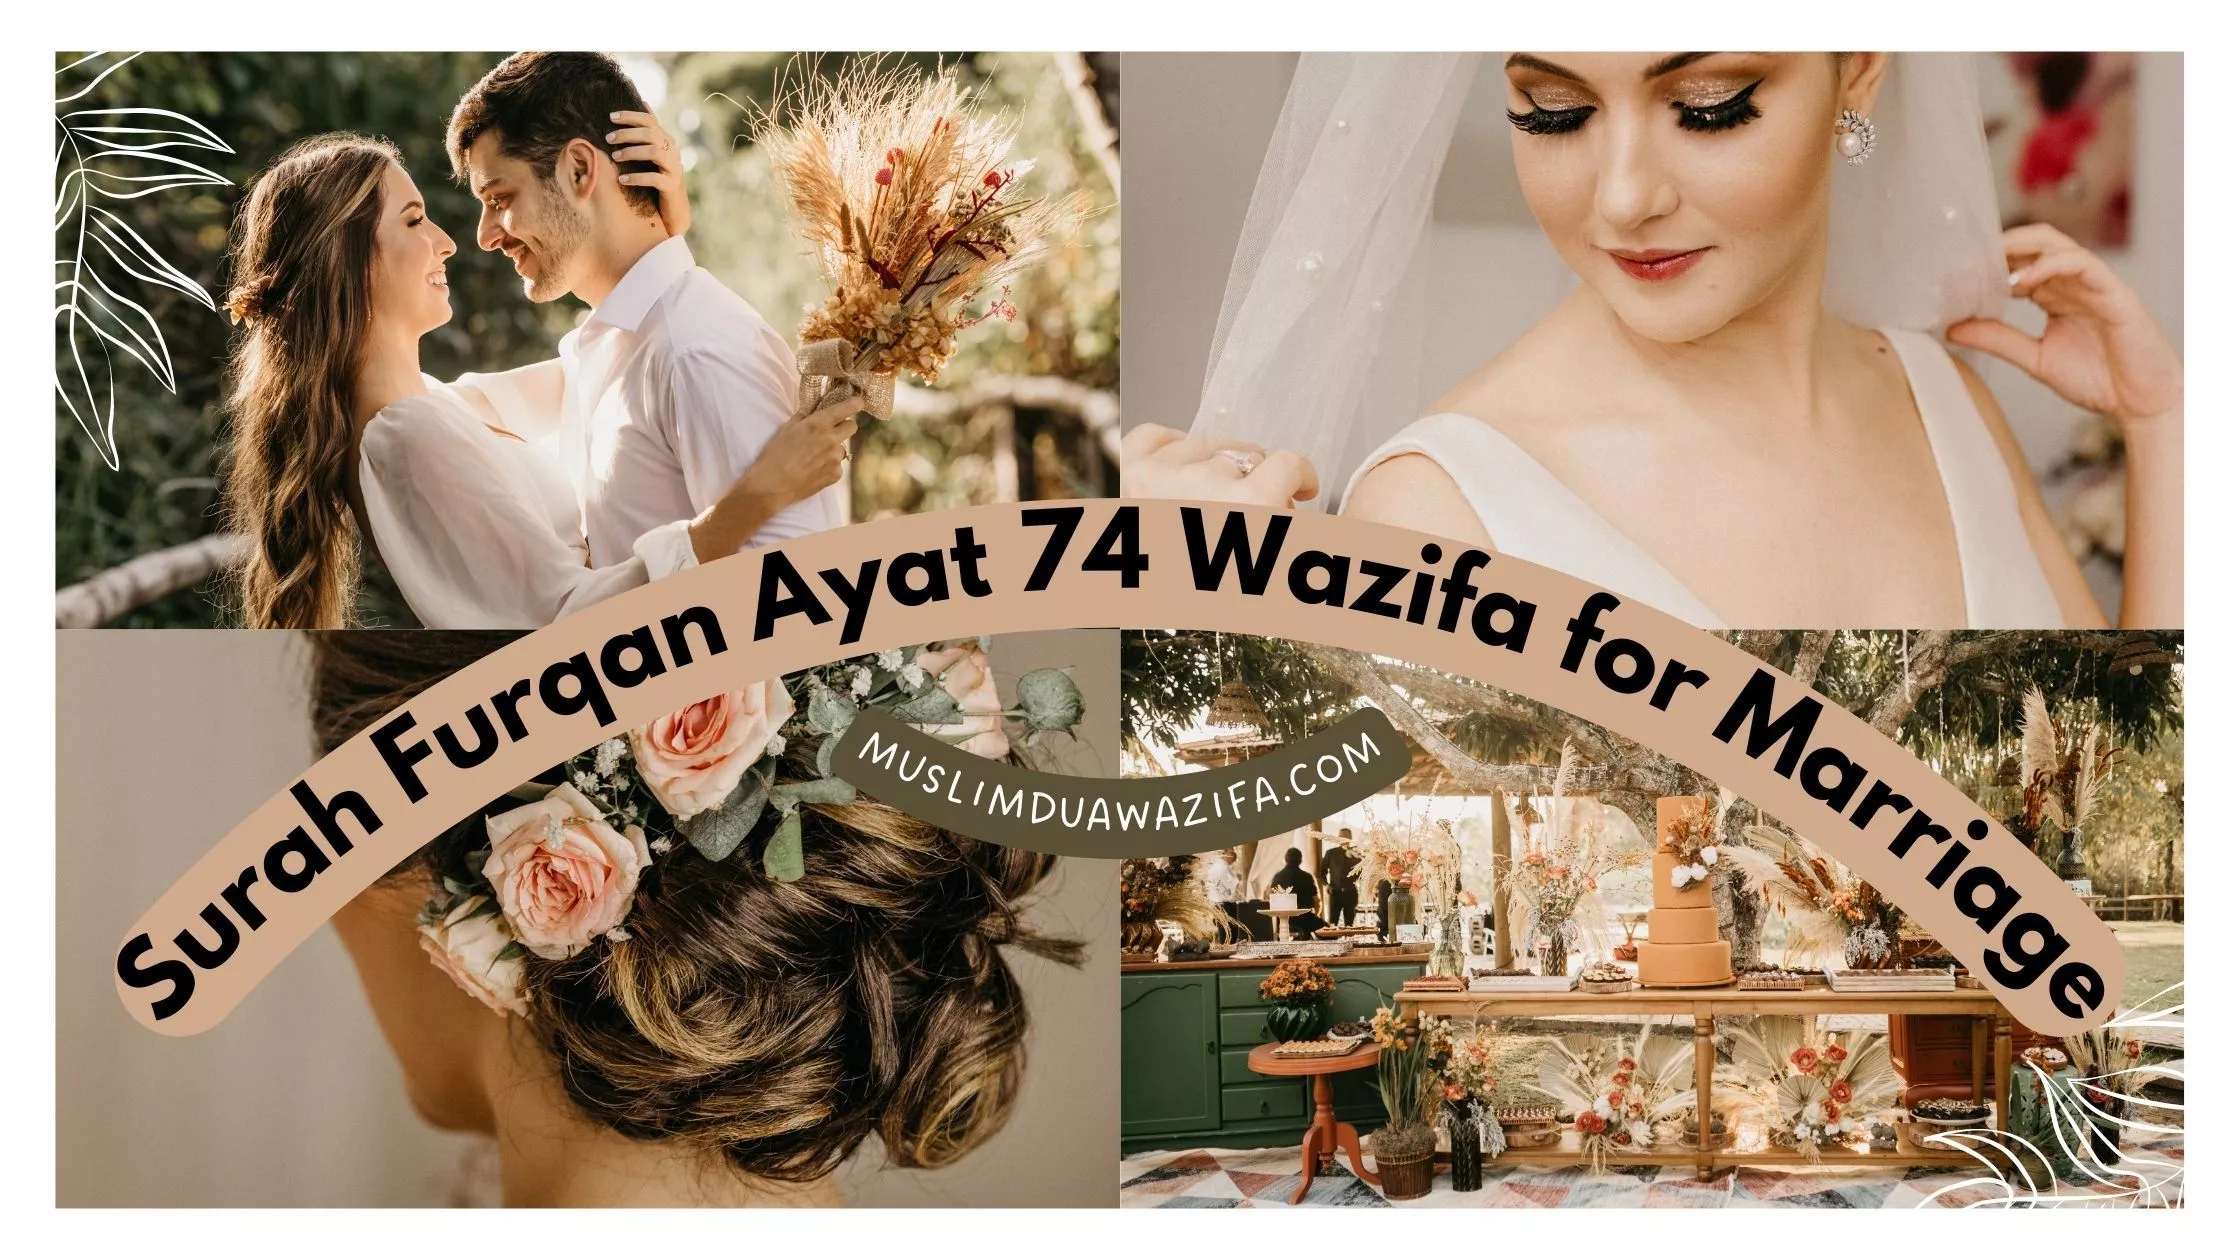 Surah Furqan Ayat 74 Wazifa for Marriage